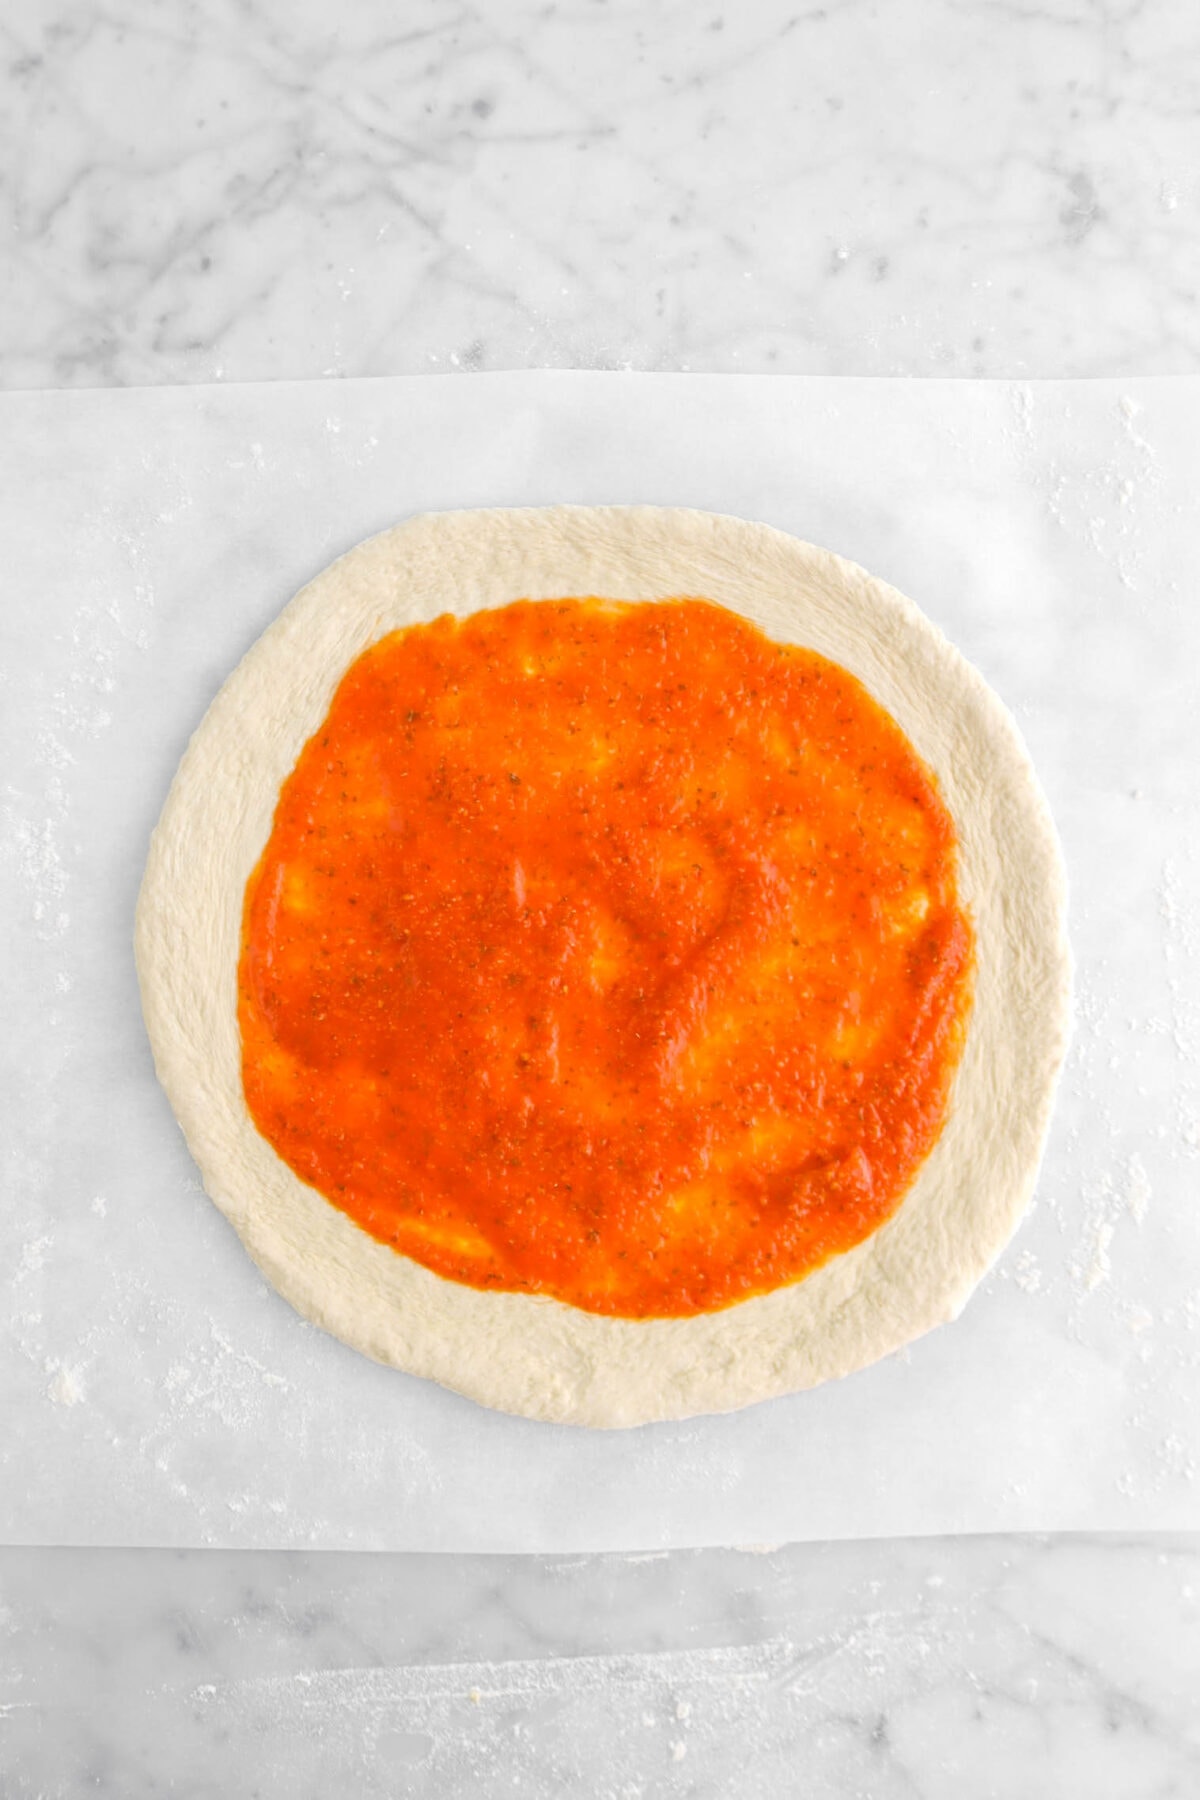 tomato sauce spread across pizza dough